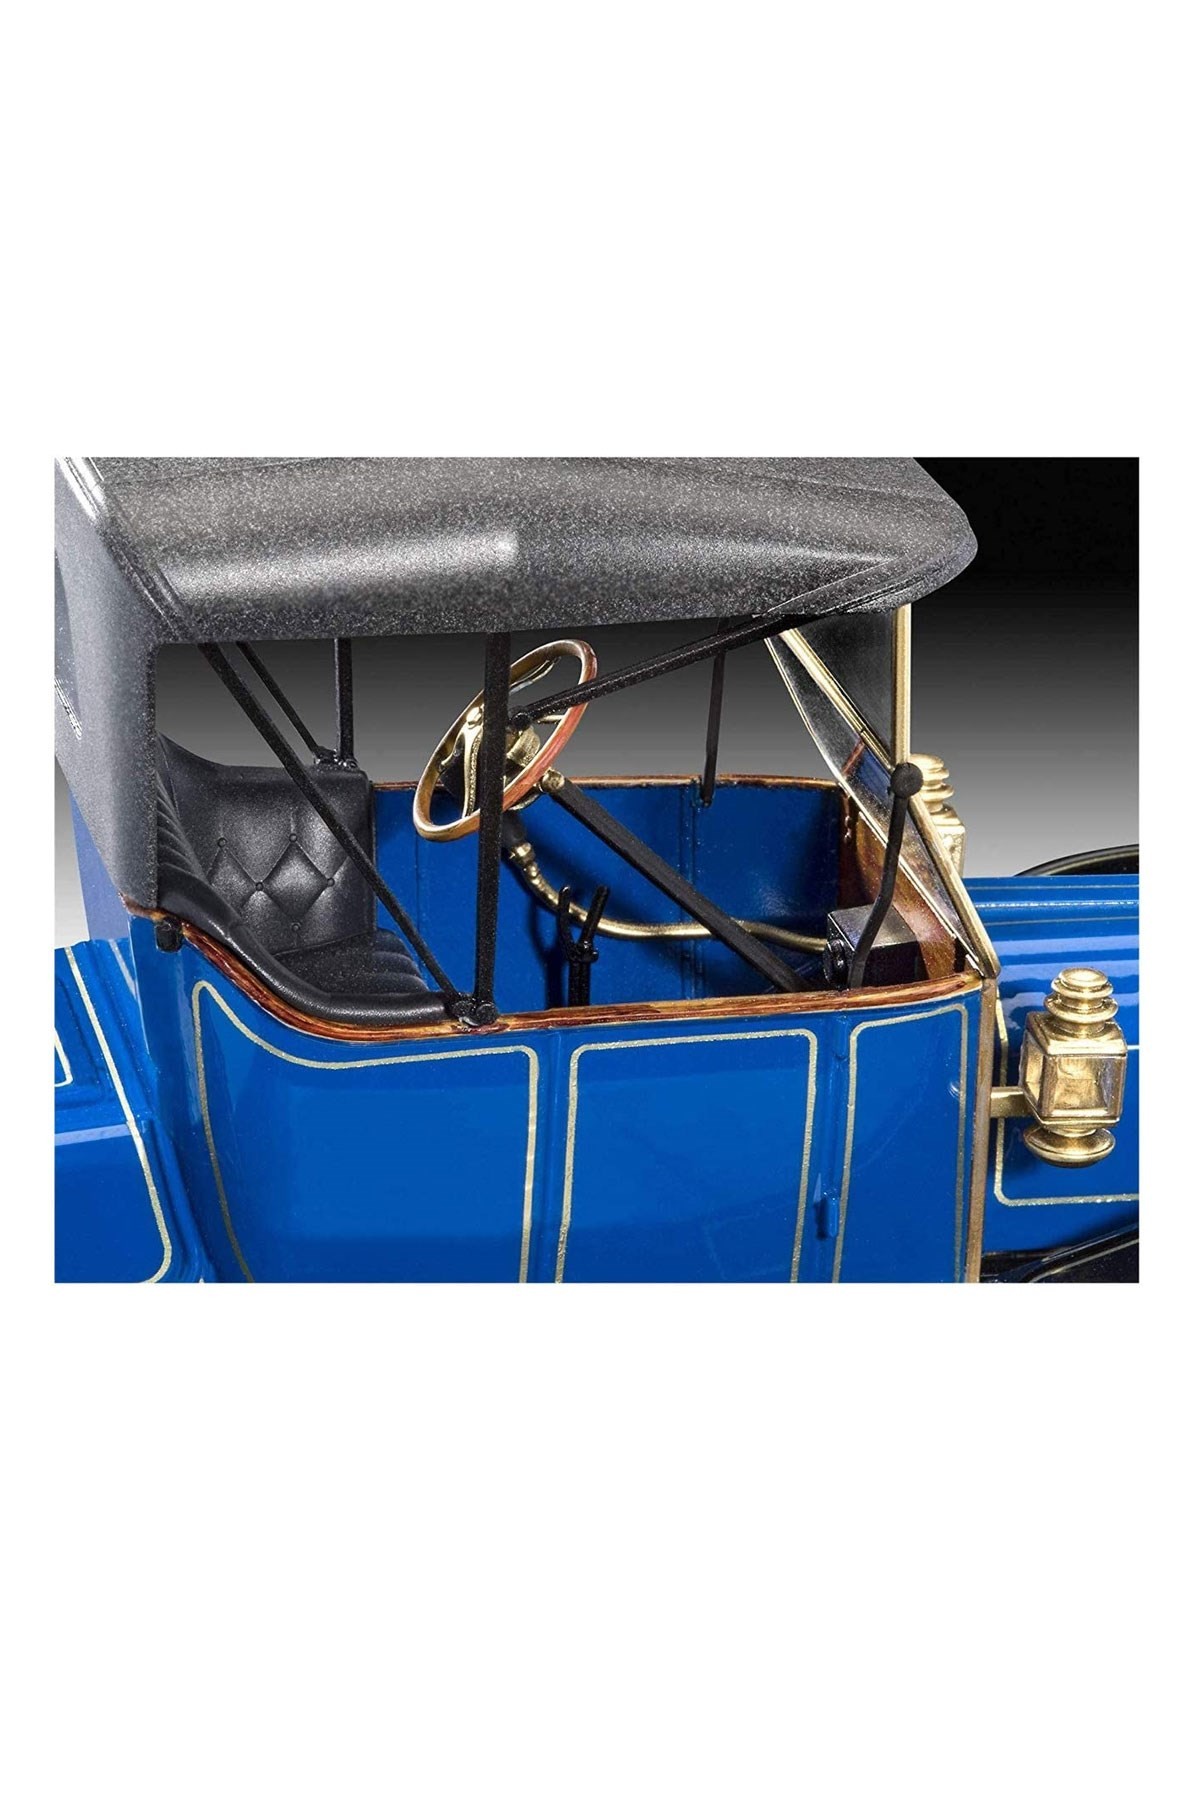 Revell 1913 Ford T Roadster